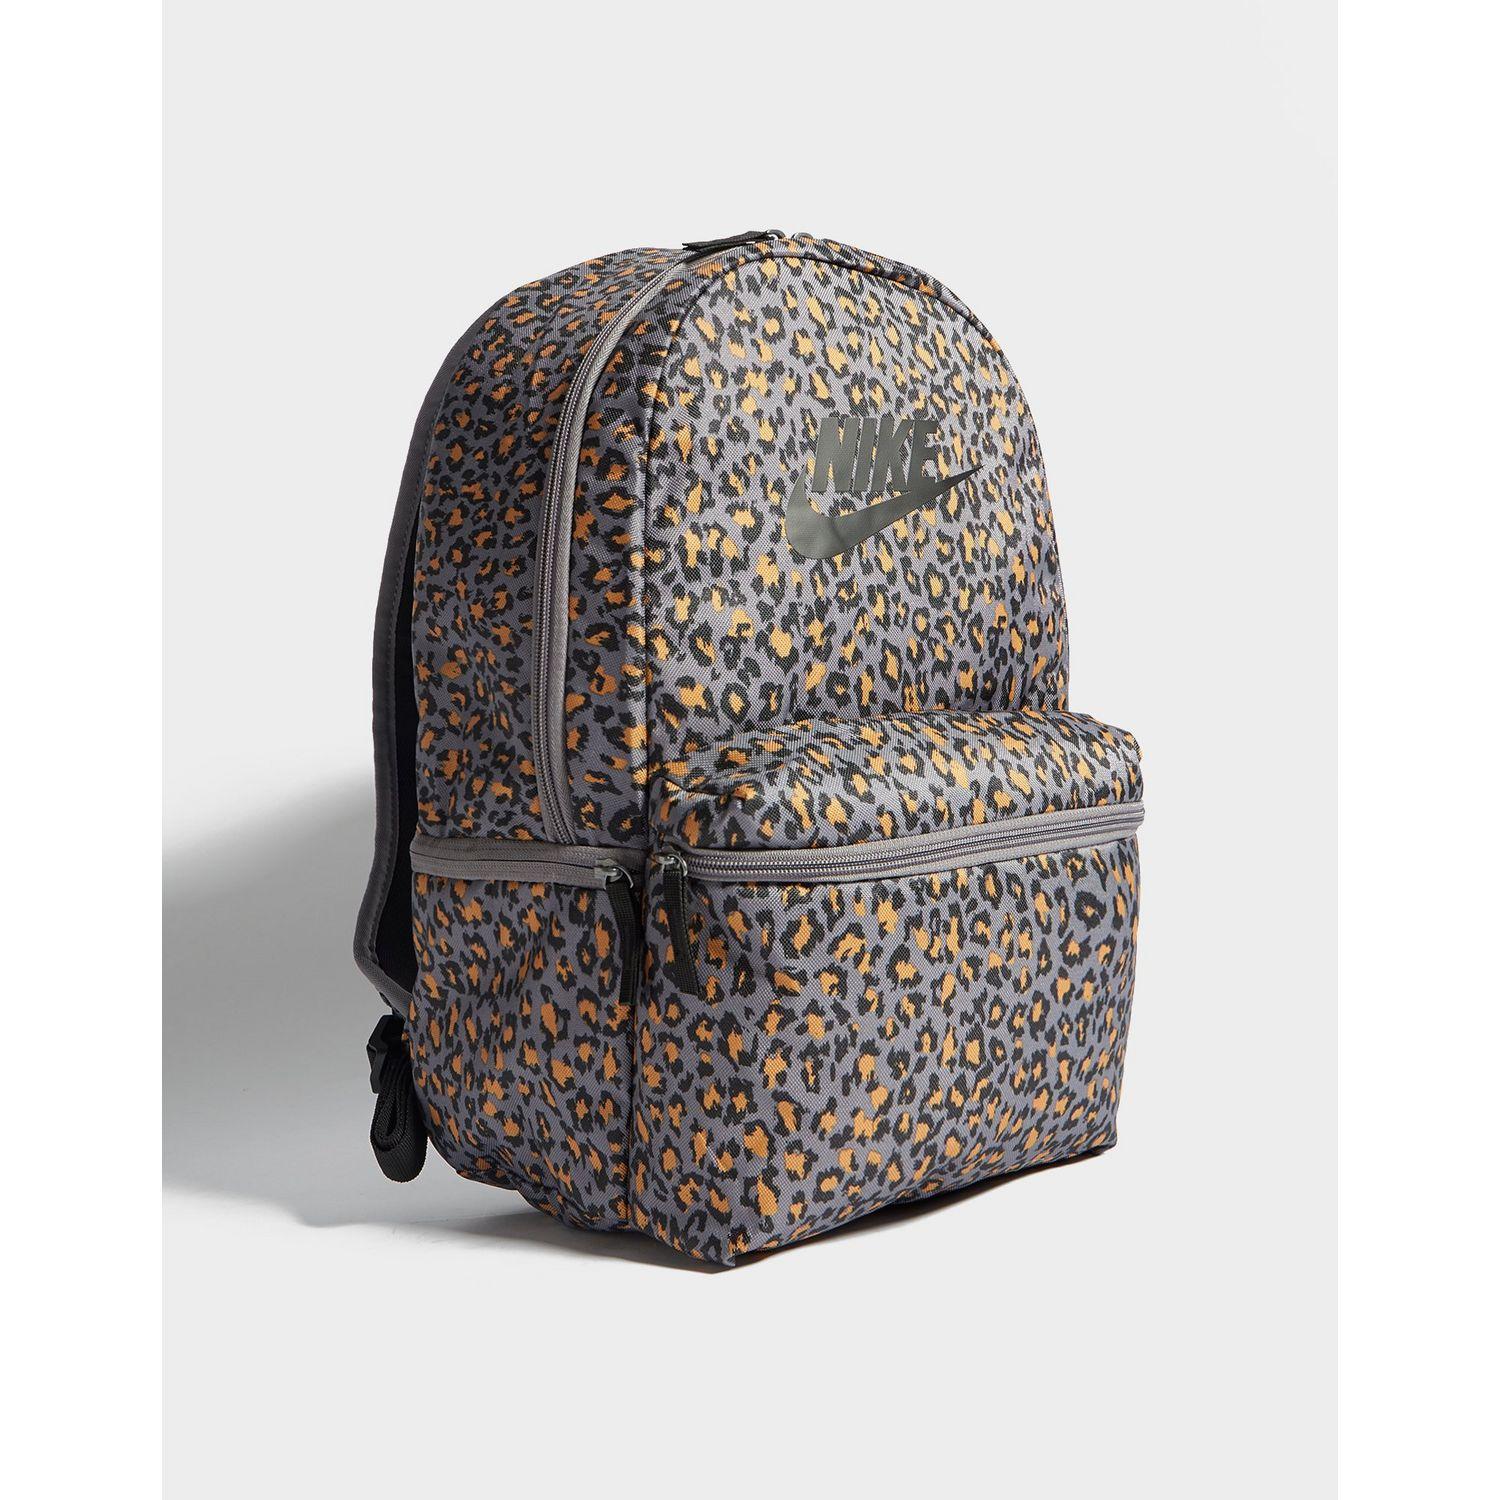 nike heritage backpack leopard print